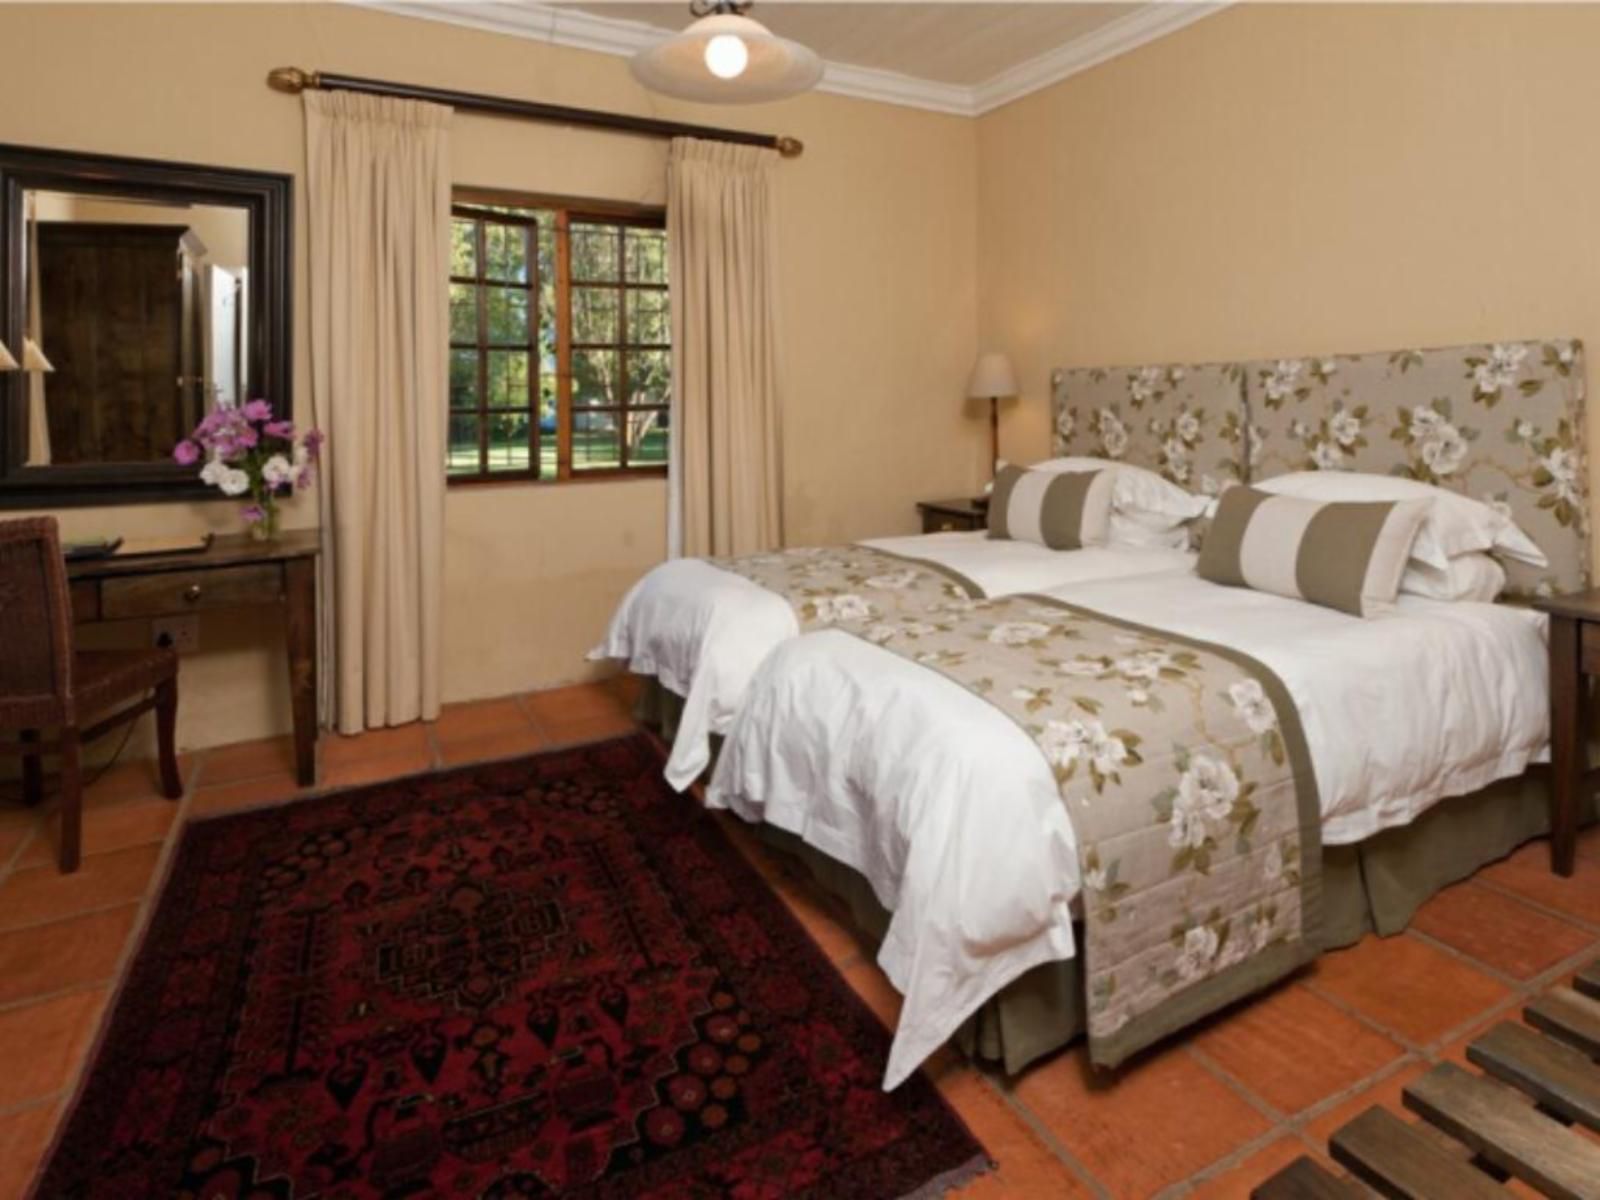 De Doornkraal Historic Country House Riversdale Western Cape South Africa Bedroom